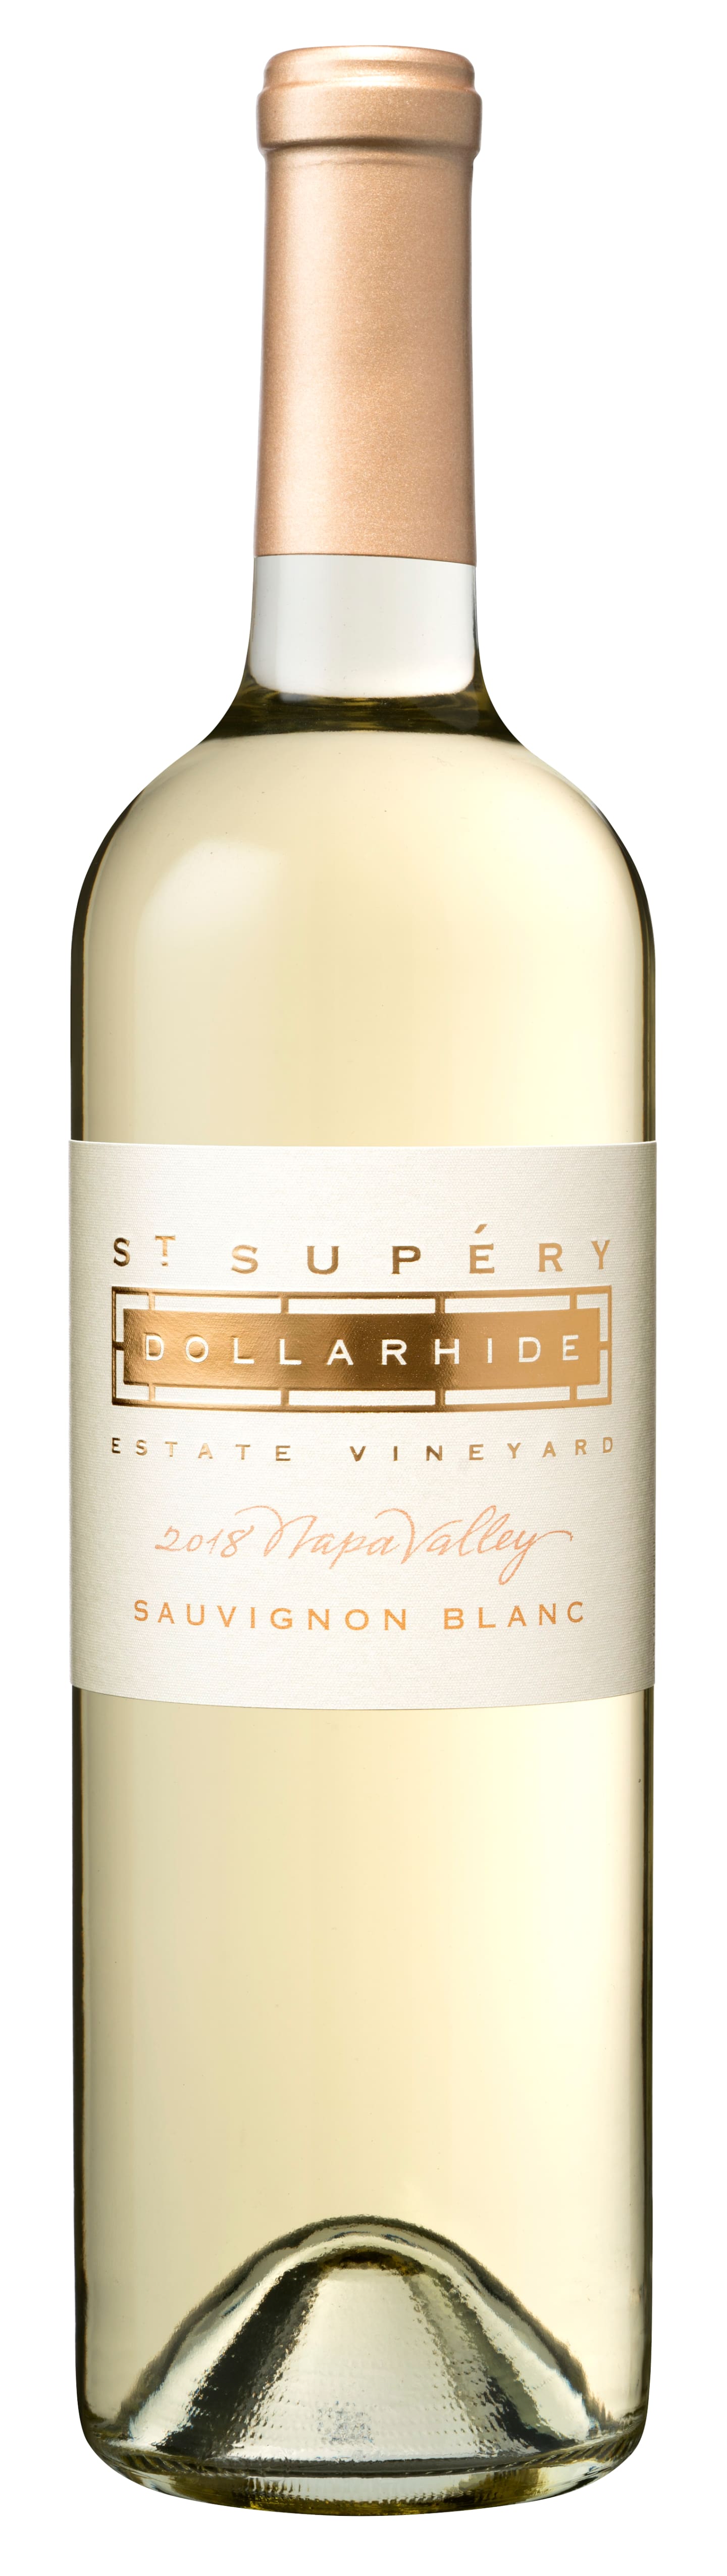 St. Supery Sauvignon Blanc Dollarhide 2019